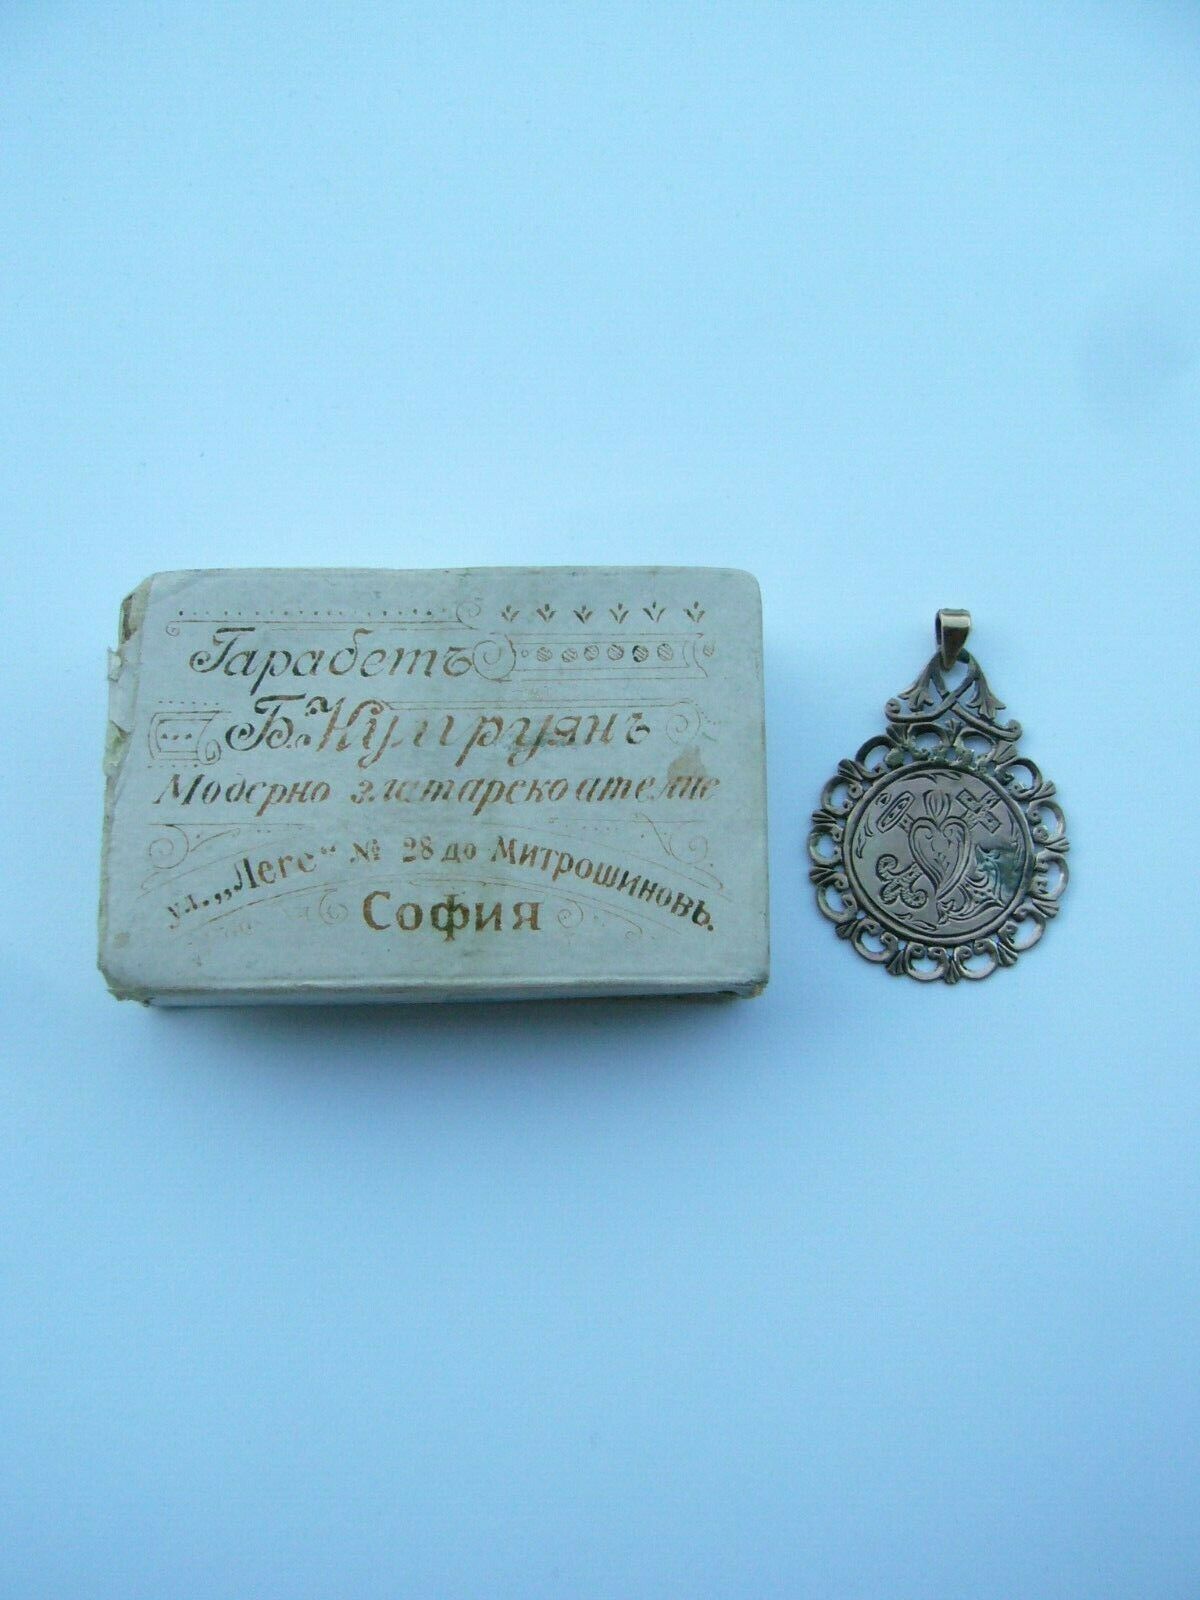 Antique Armenian Christian Gold Pendant - Faith, Hope And Charity - Circa 1900